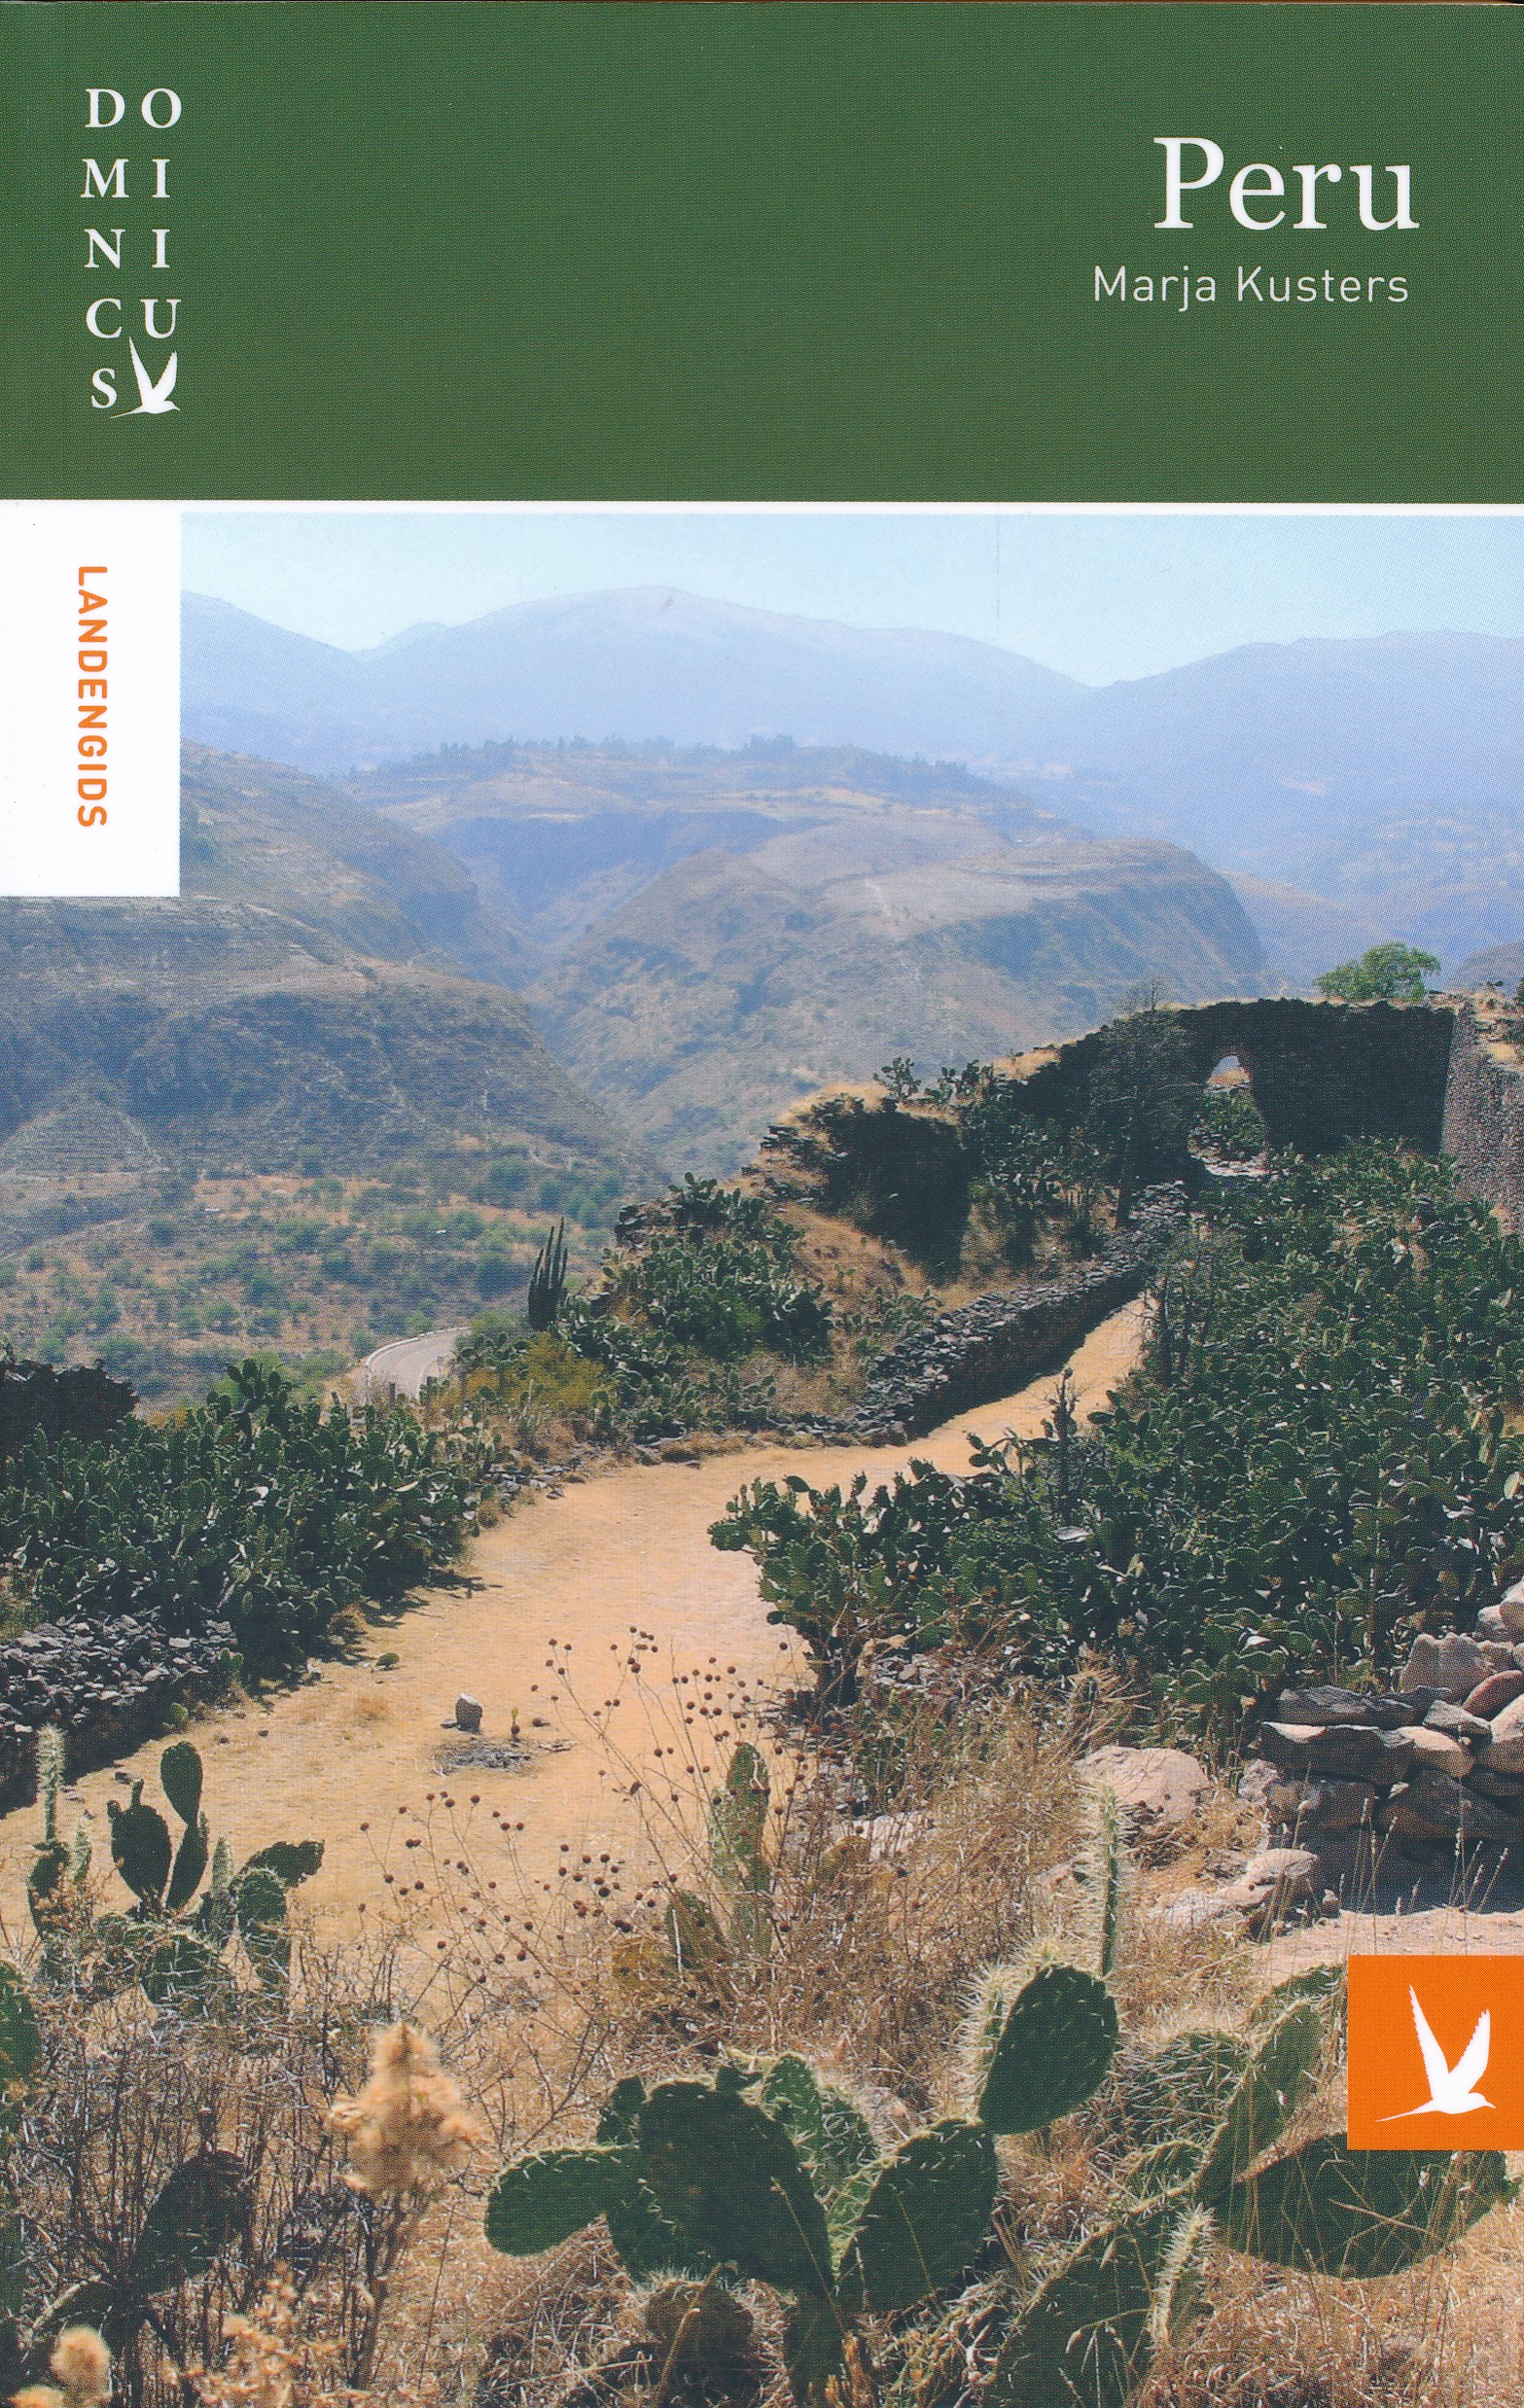 Online bestellen: Reisgids Dominicus Peru | Gottmer